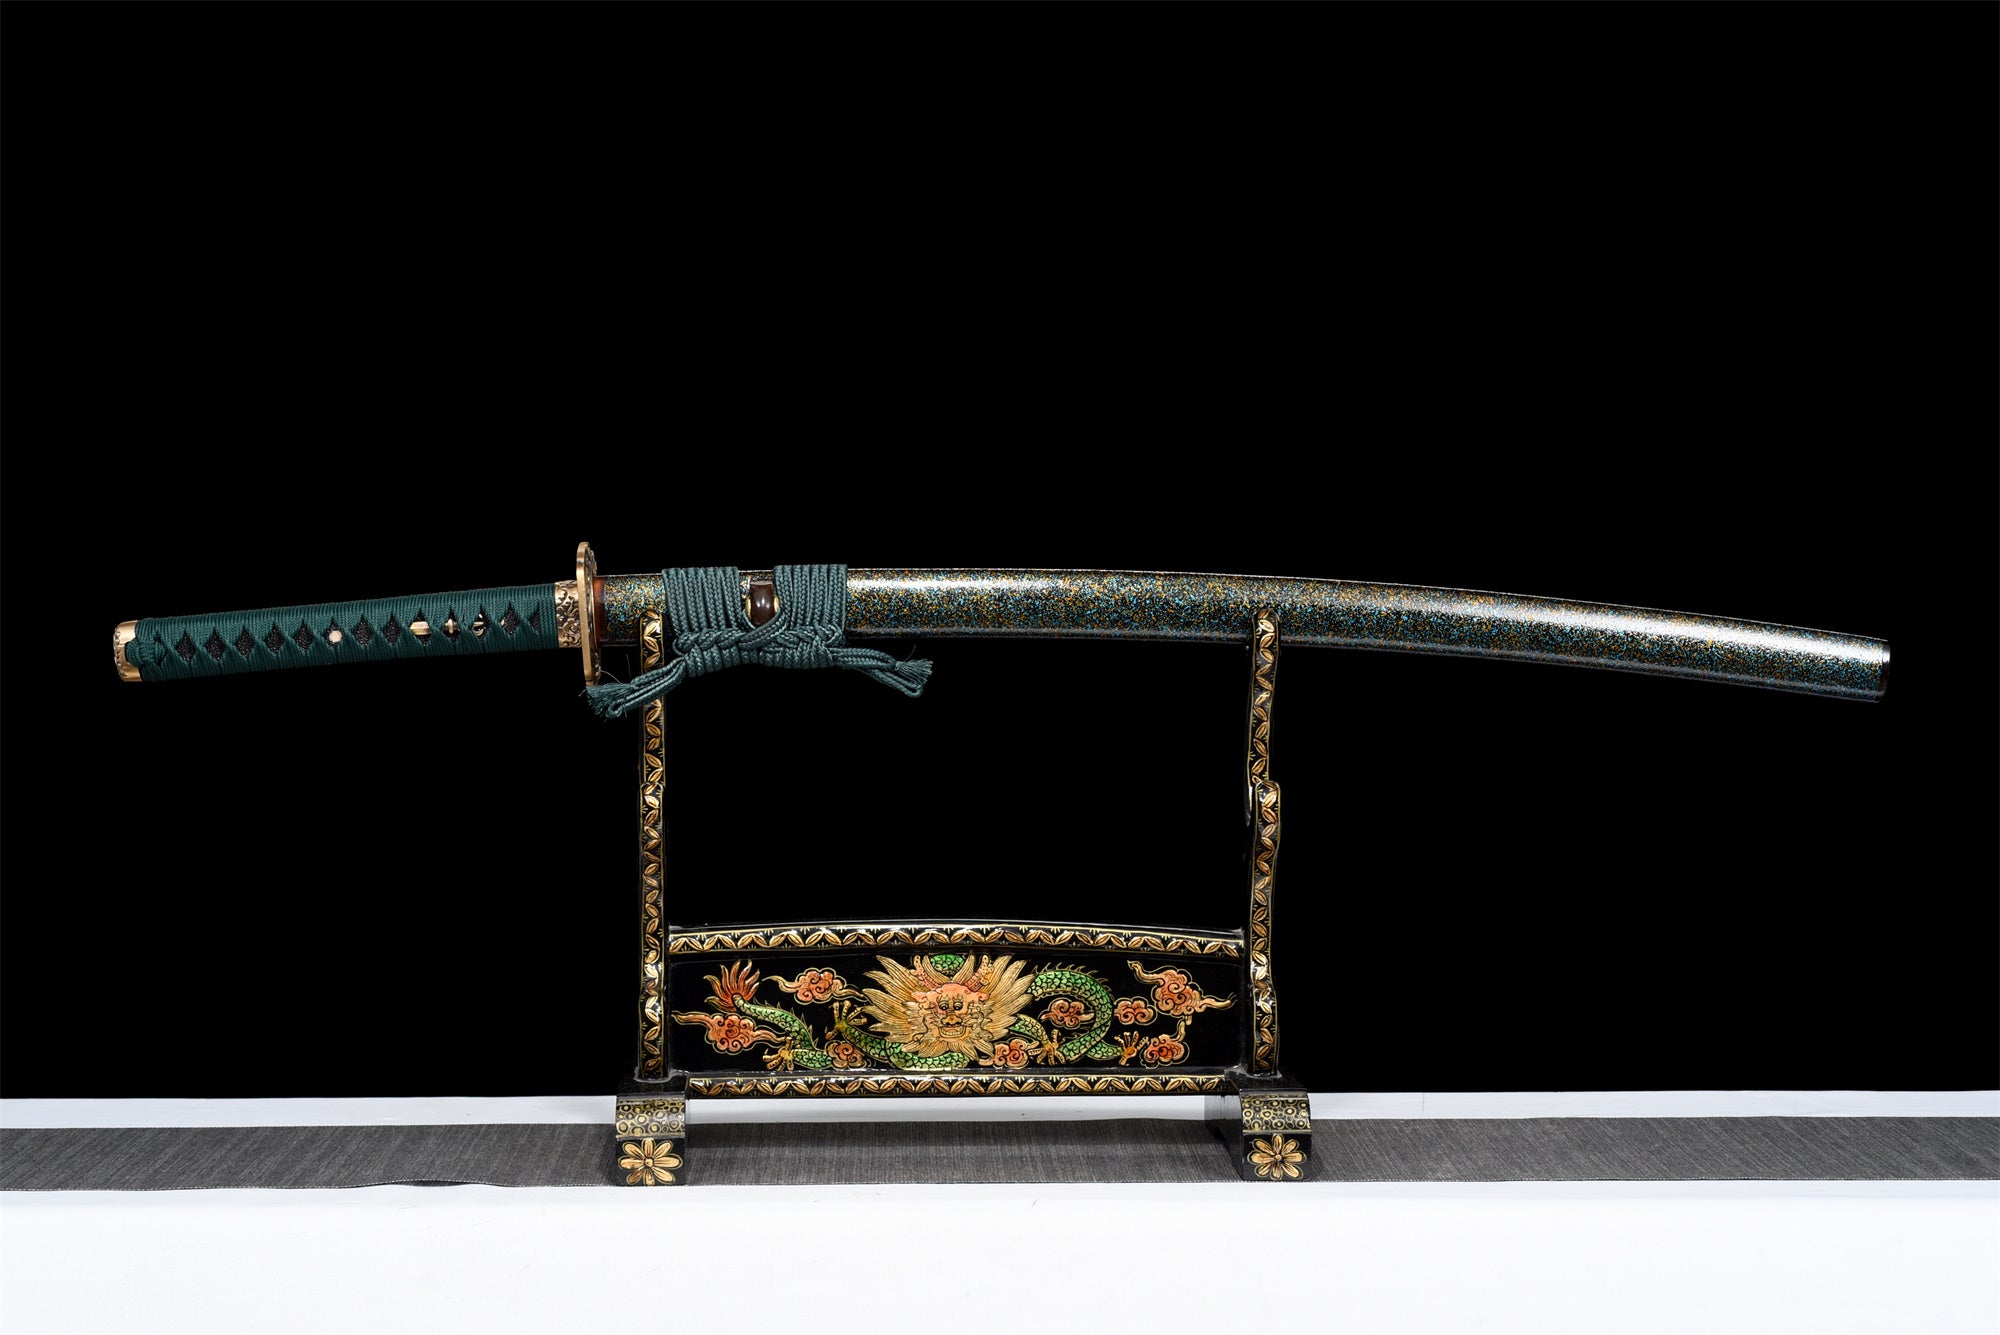 Damascus Steel Handmade Green Katana Sword Real Japanese Samurai Sword Full Tang